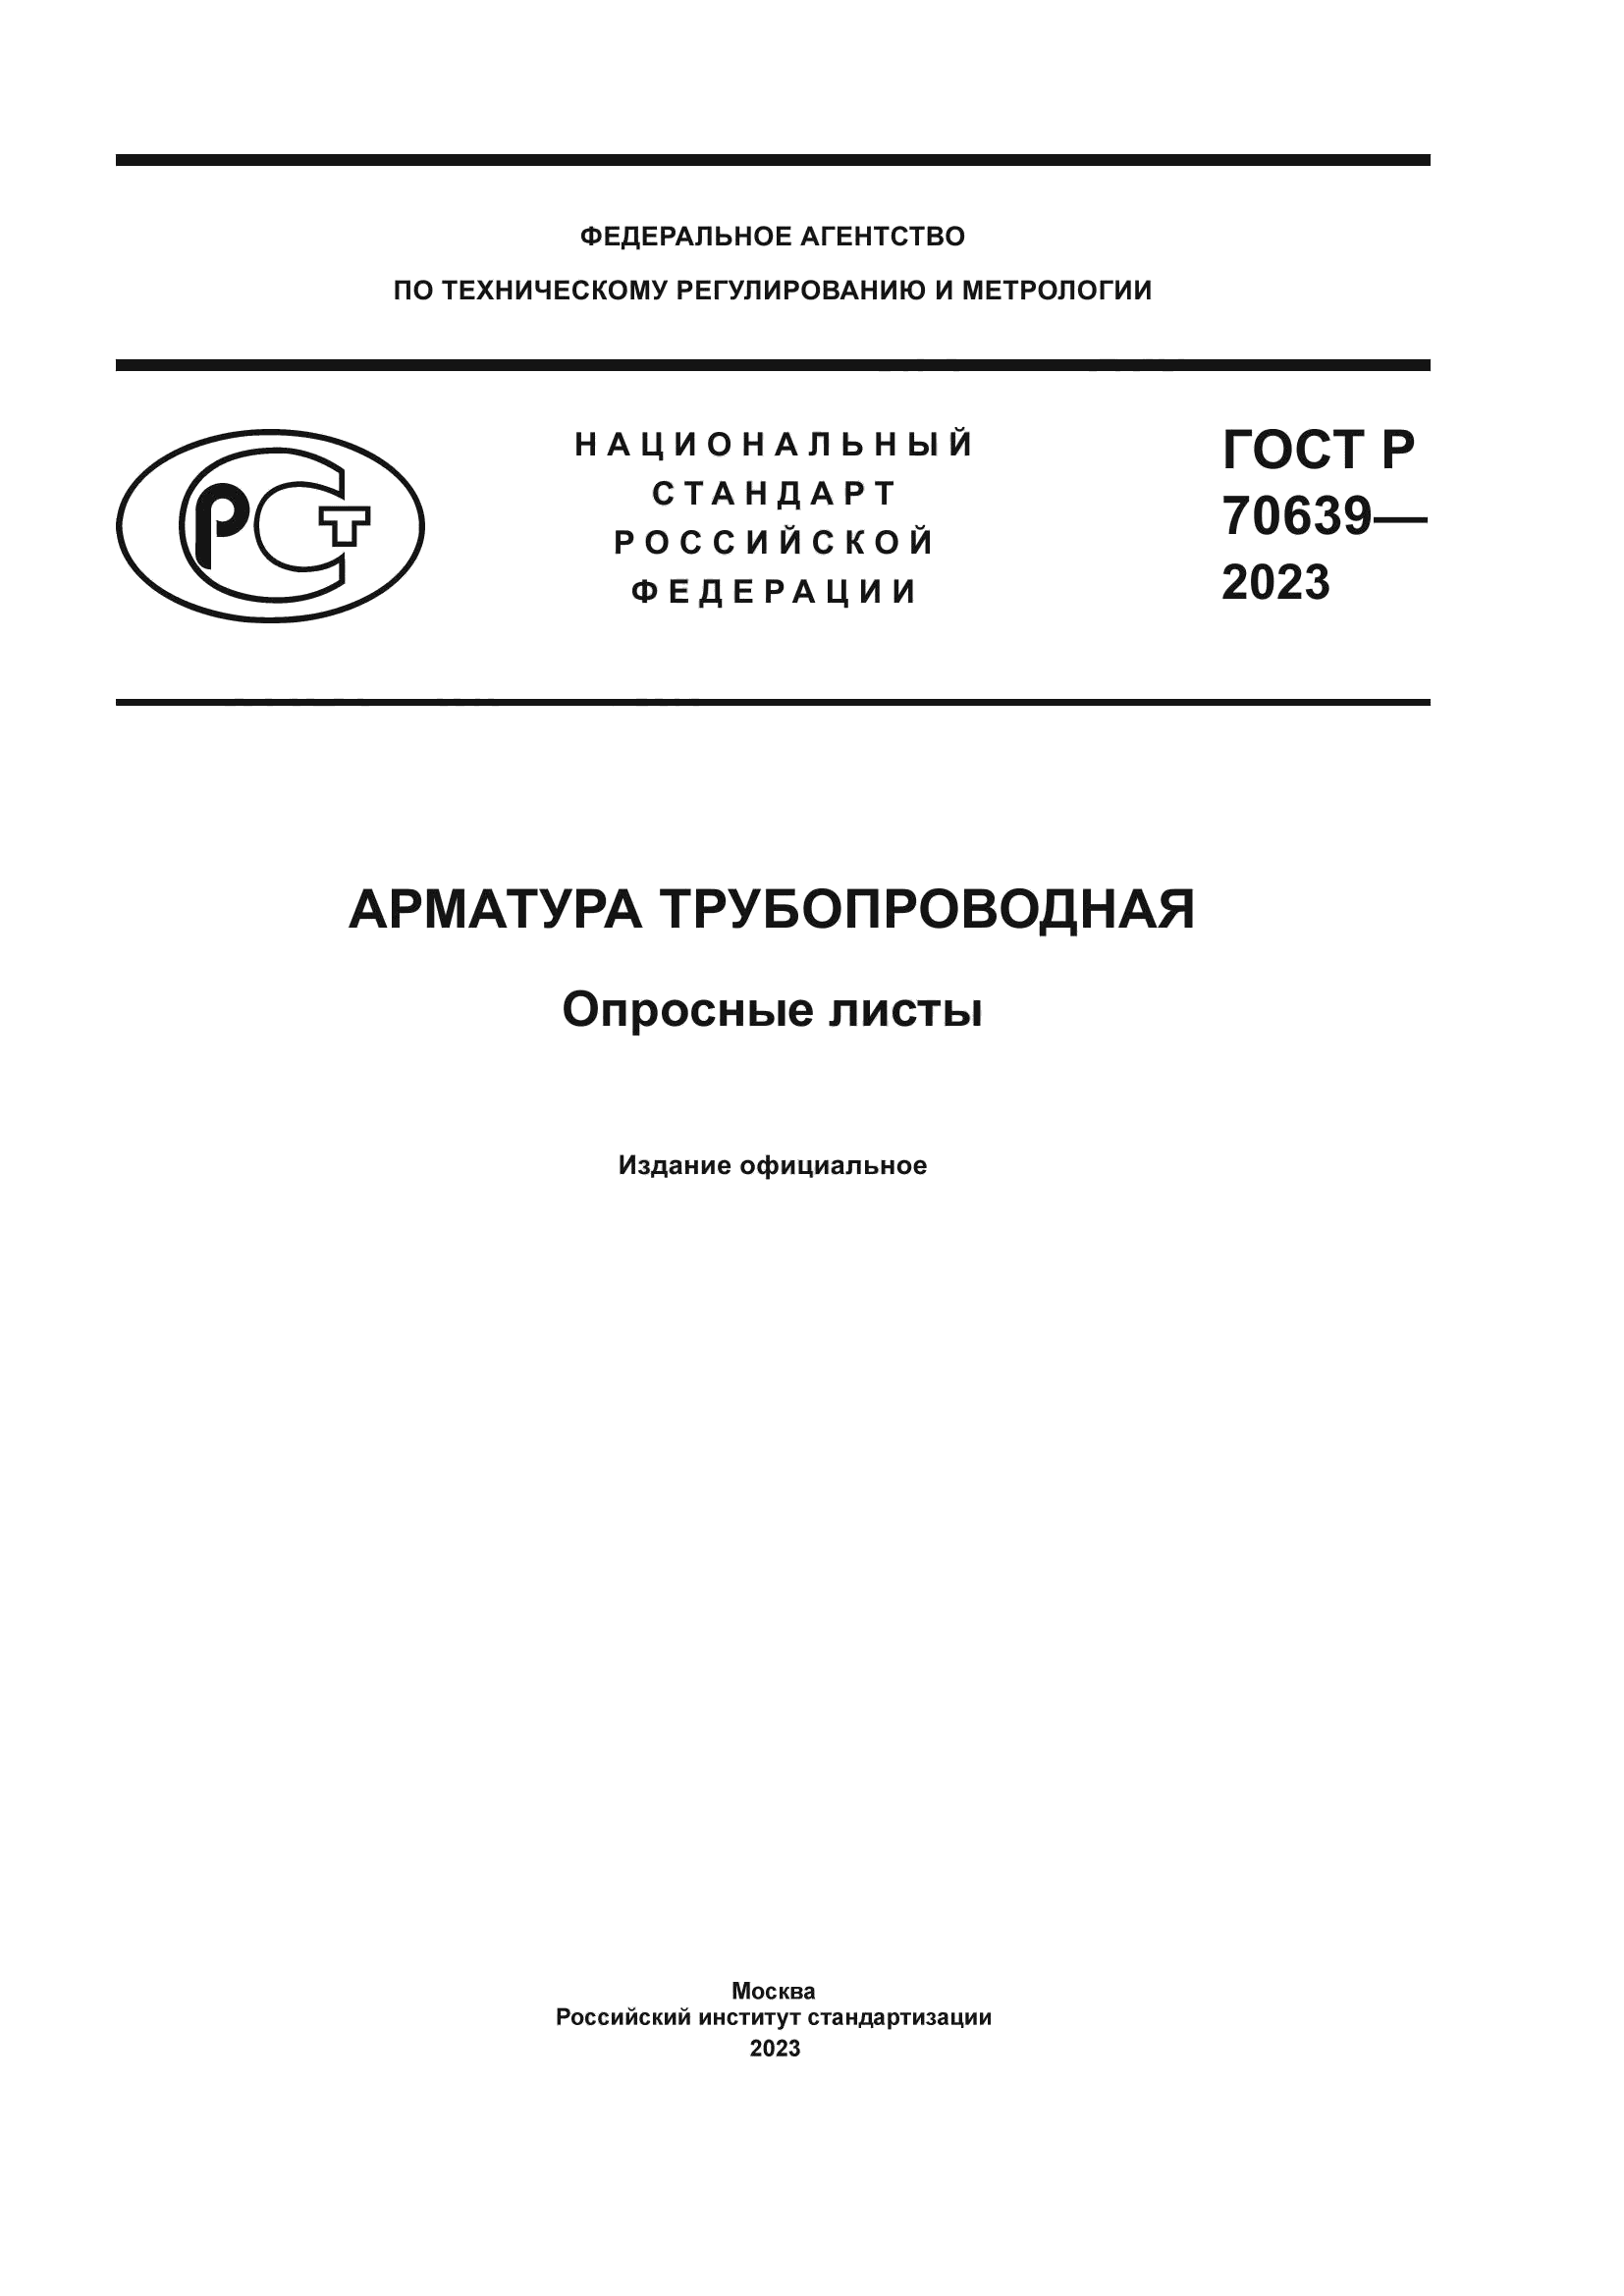 ГОСТ Р 70639-2023